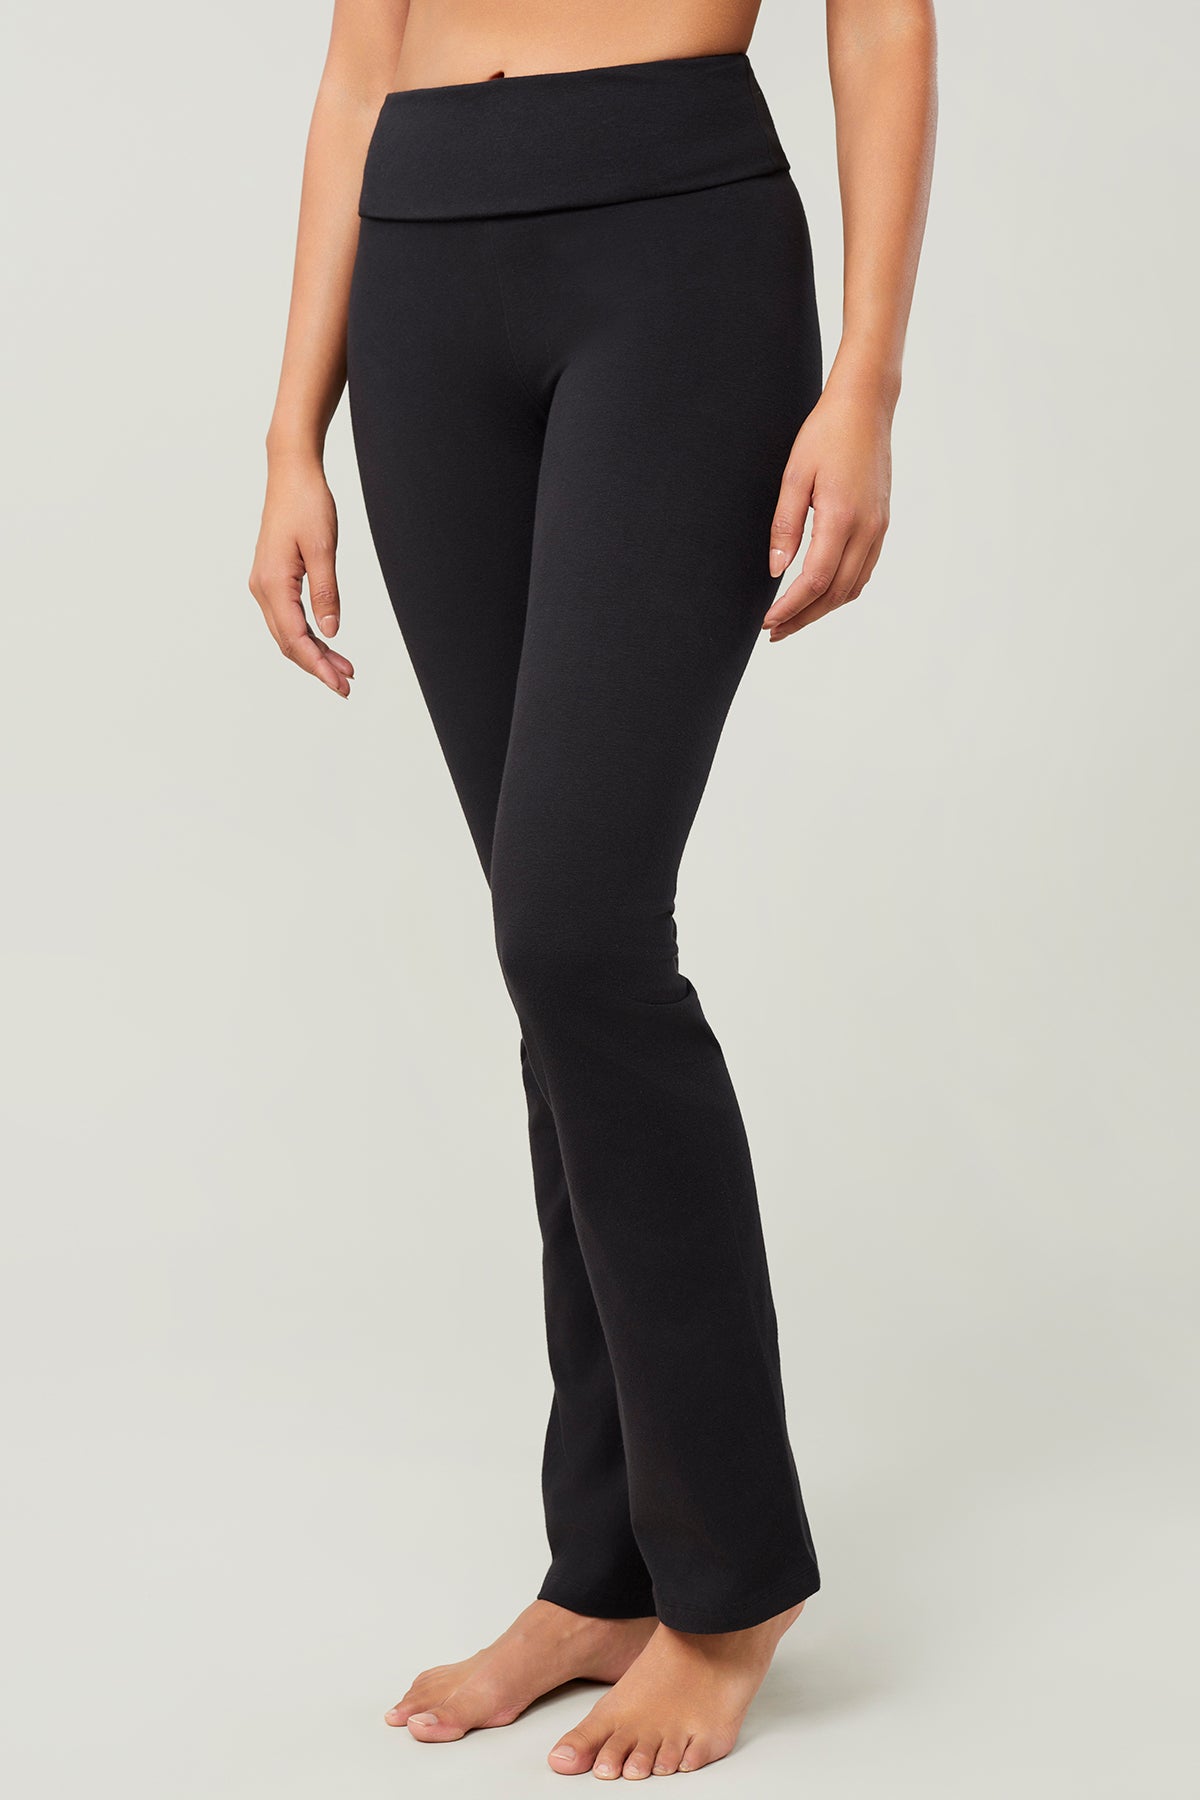 Black Flare Yoga Pants / Schwarze Yoga Hose, Schlaghose